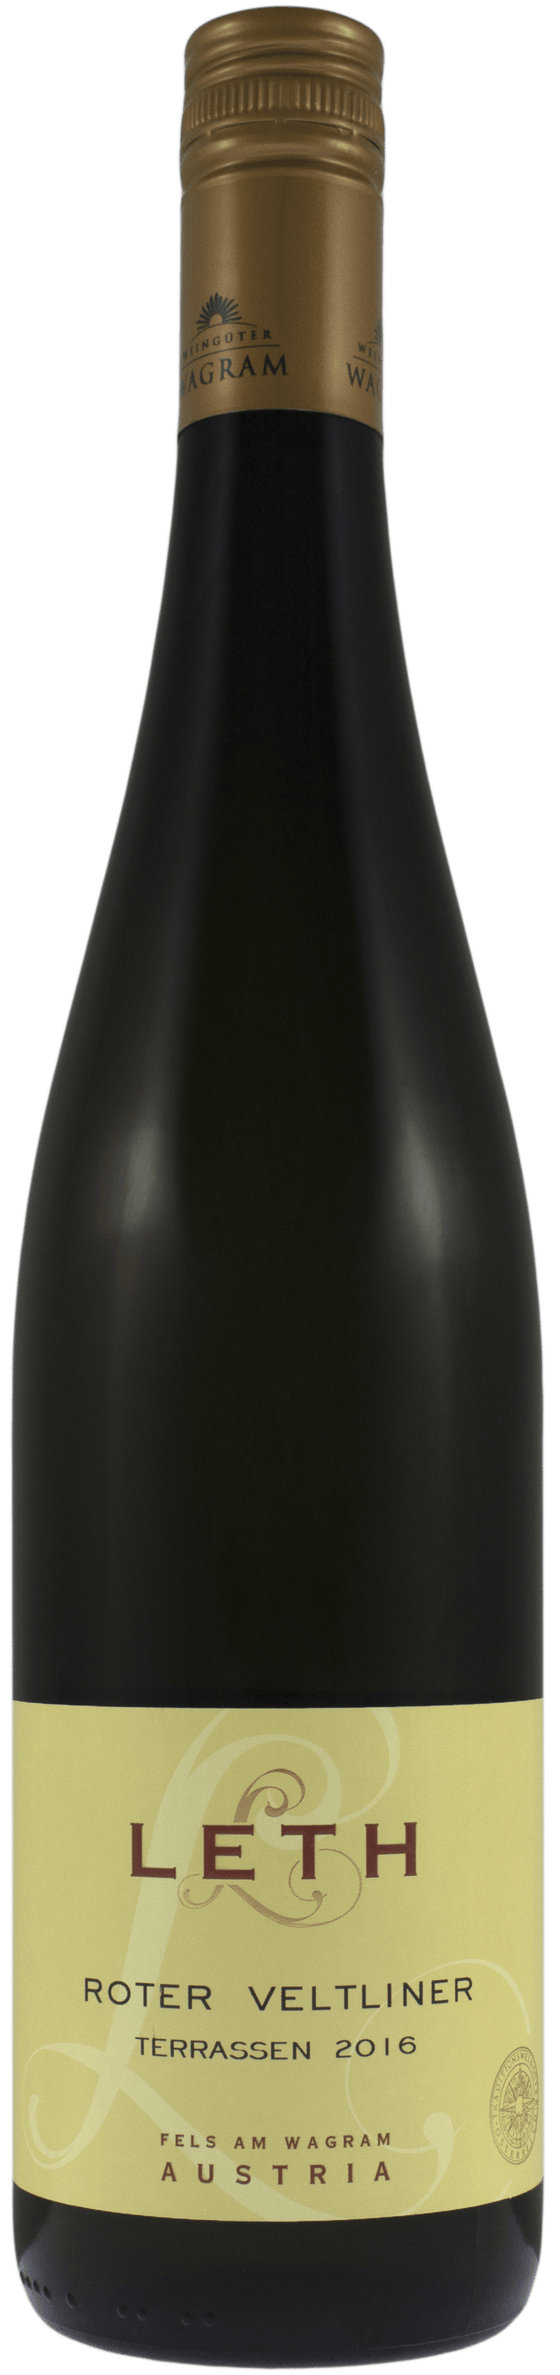 Pinnacle Imports Wine Leth Roter Veltliner